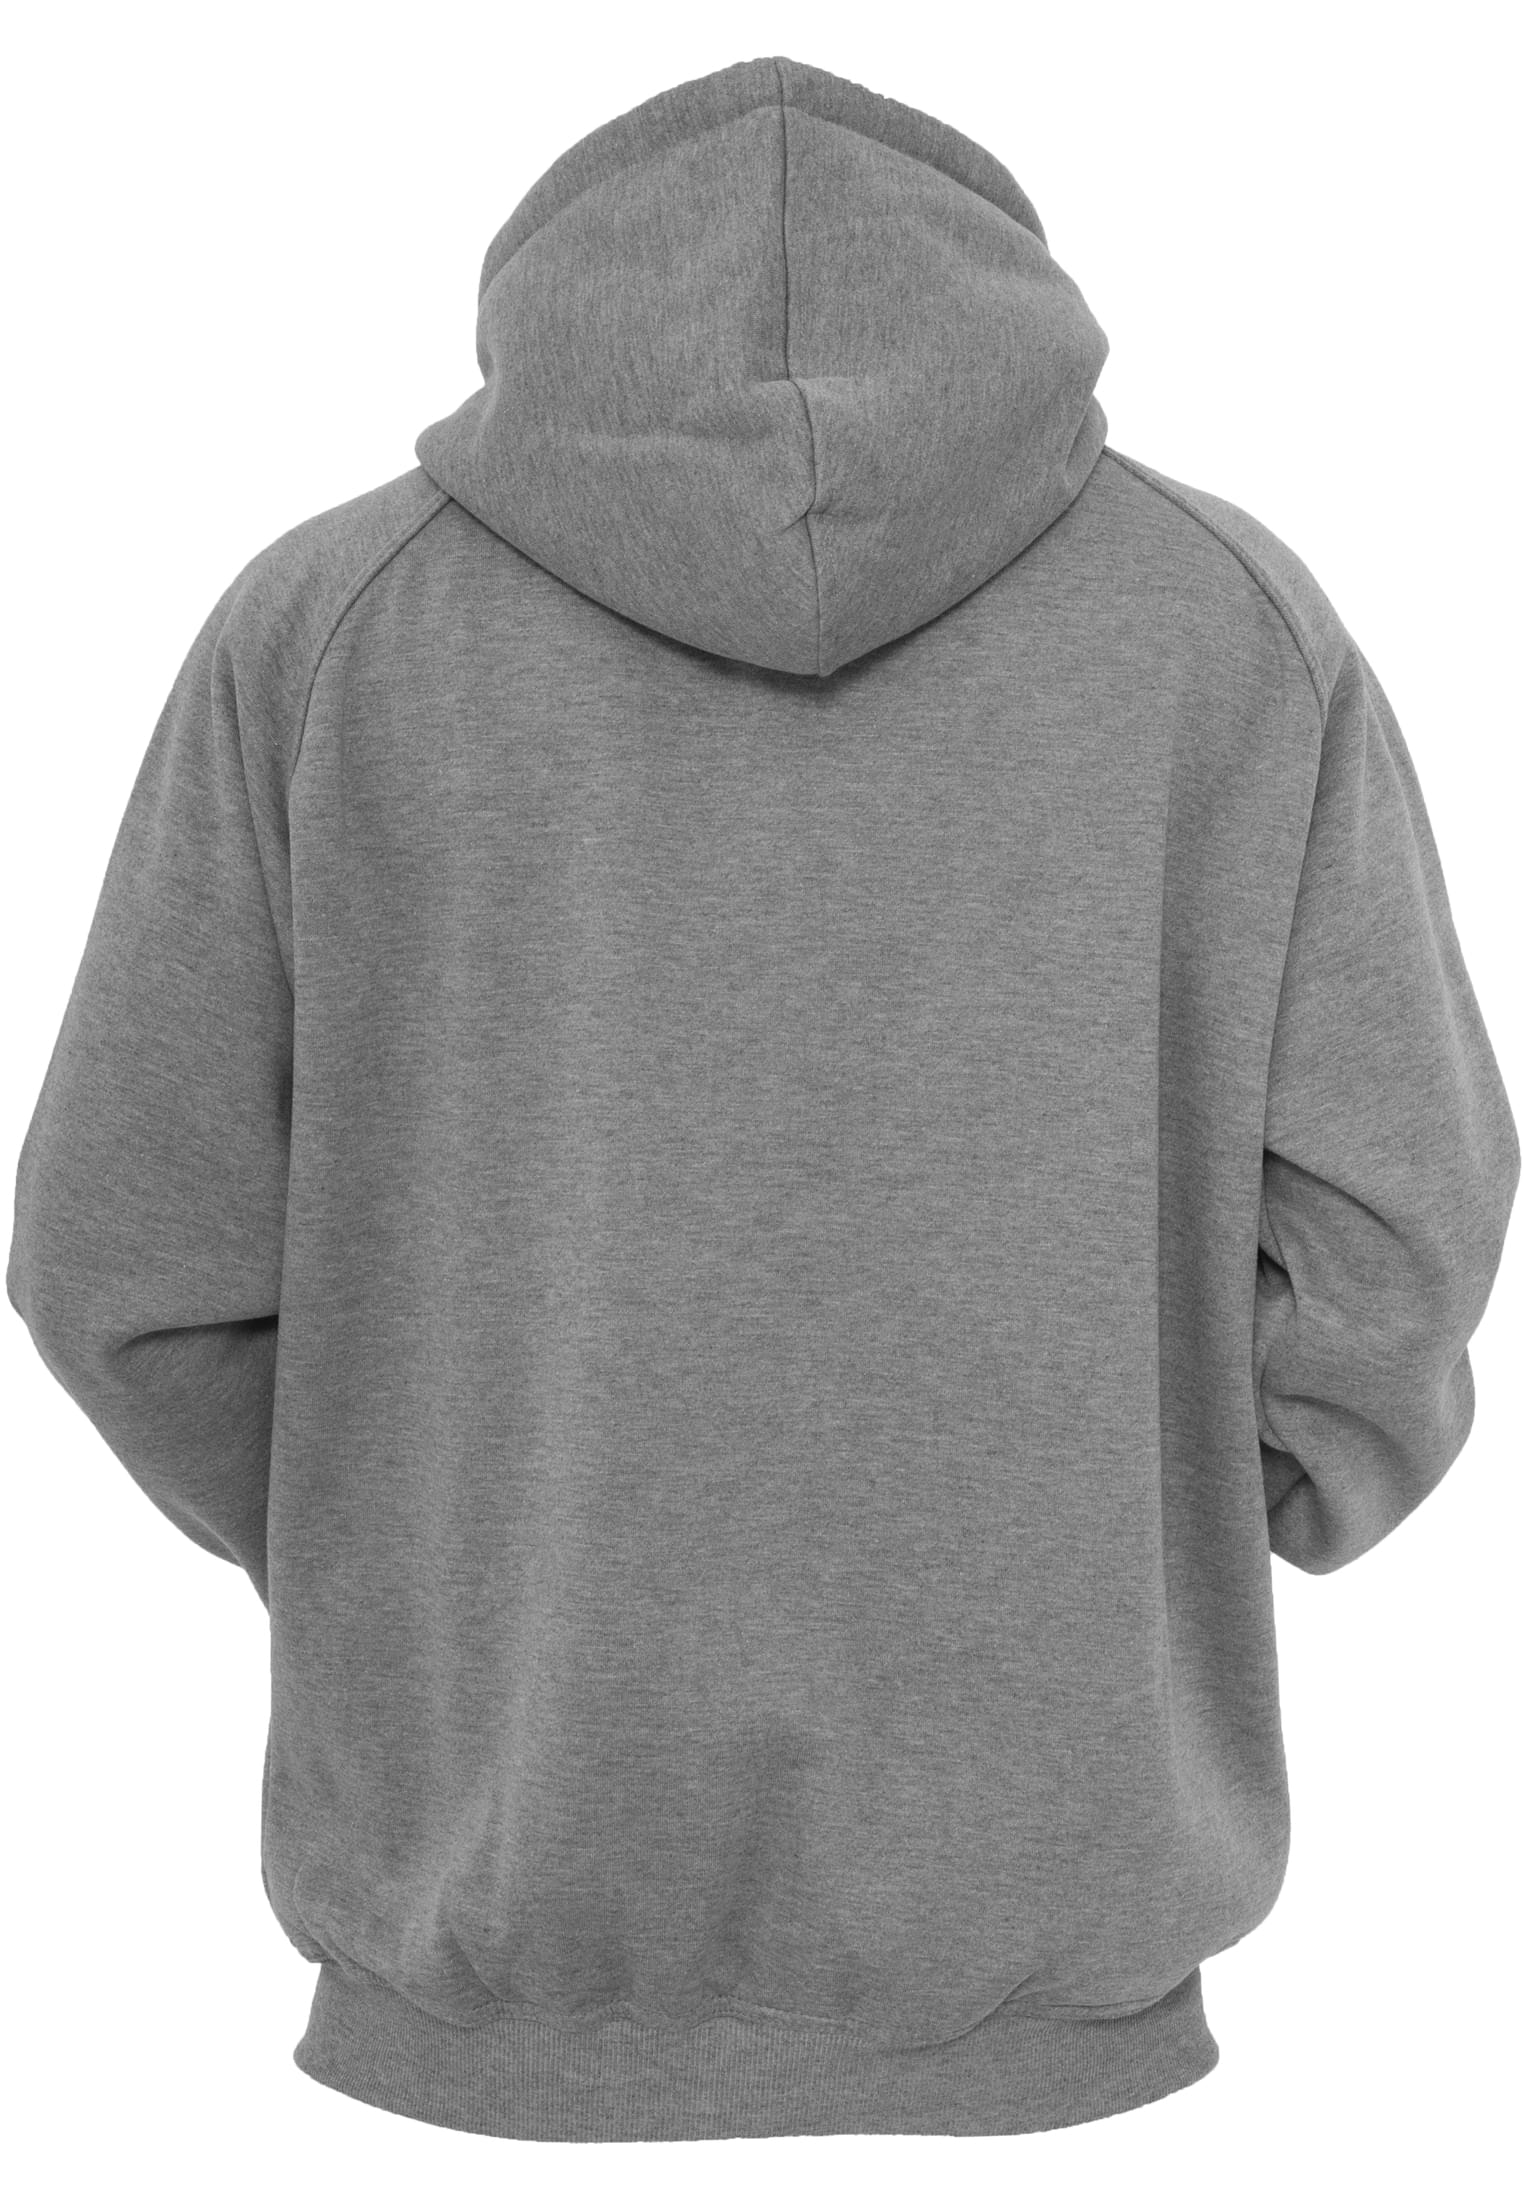 Plus Size Blank Hoody in Farbe grey